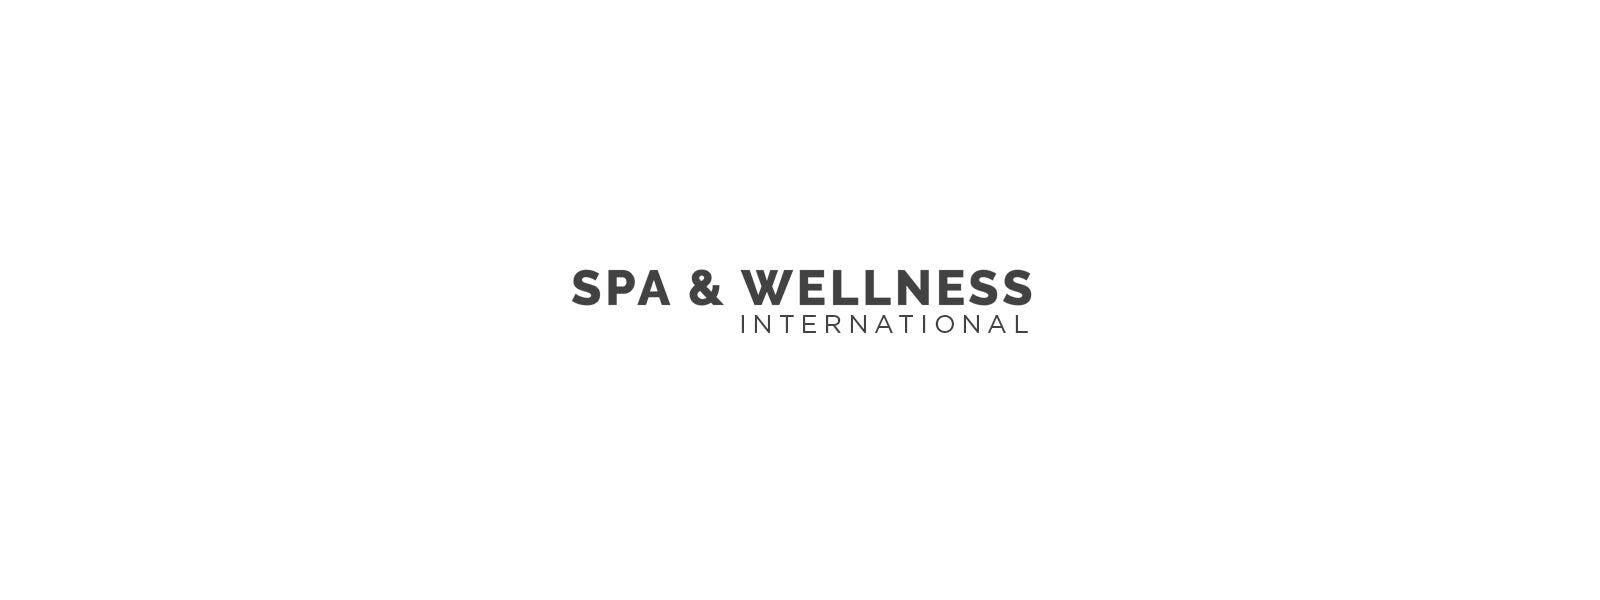 Spa & Wellness International – The Slow Skincare Movement